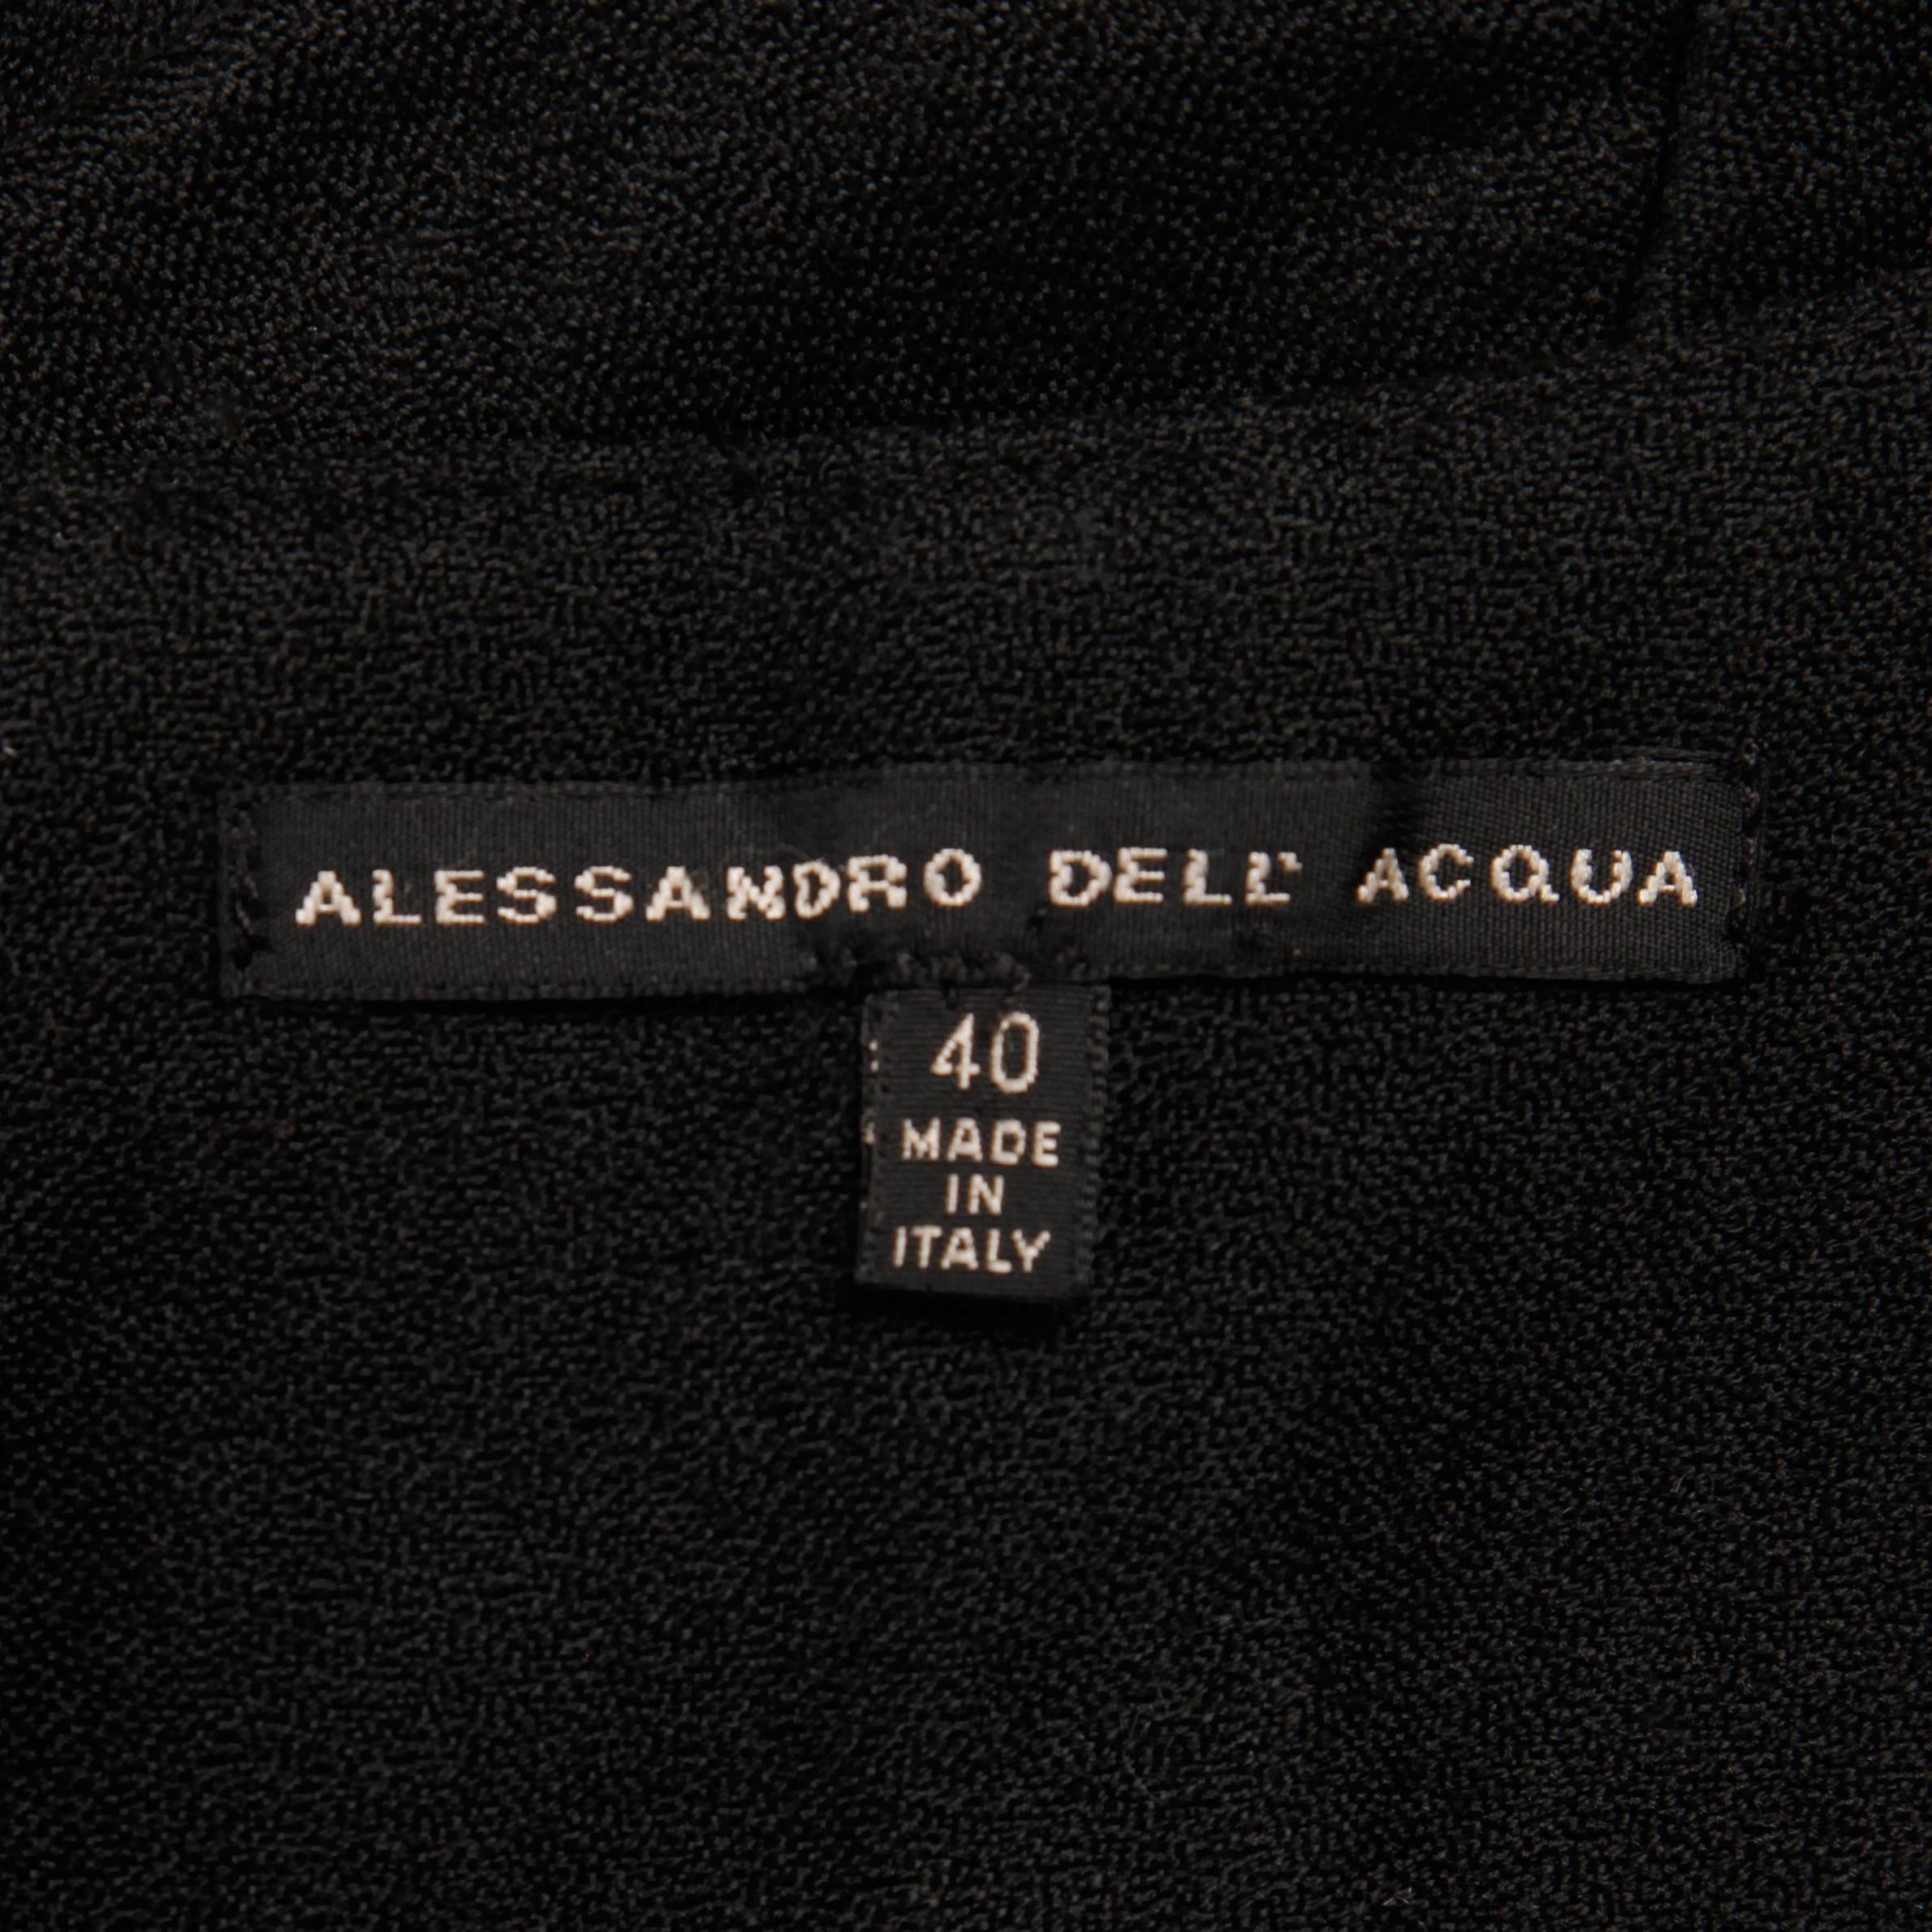 Alessandro Dell'acqua - Blazer avant-garde, noire en vente 1